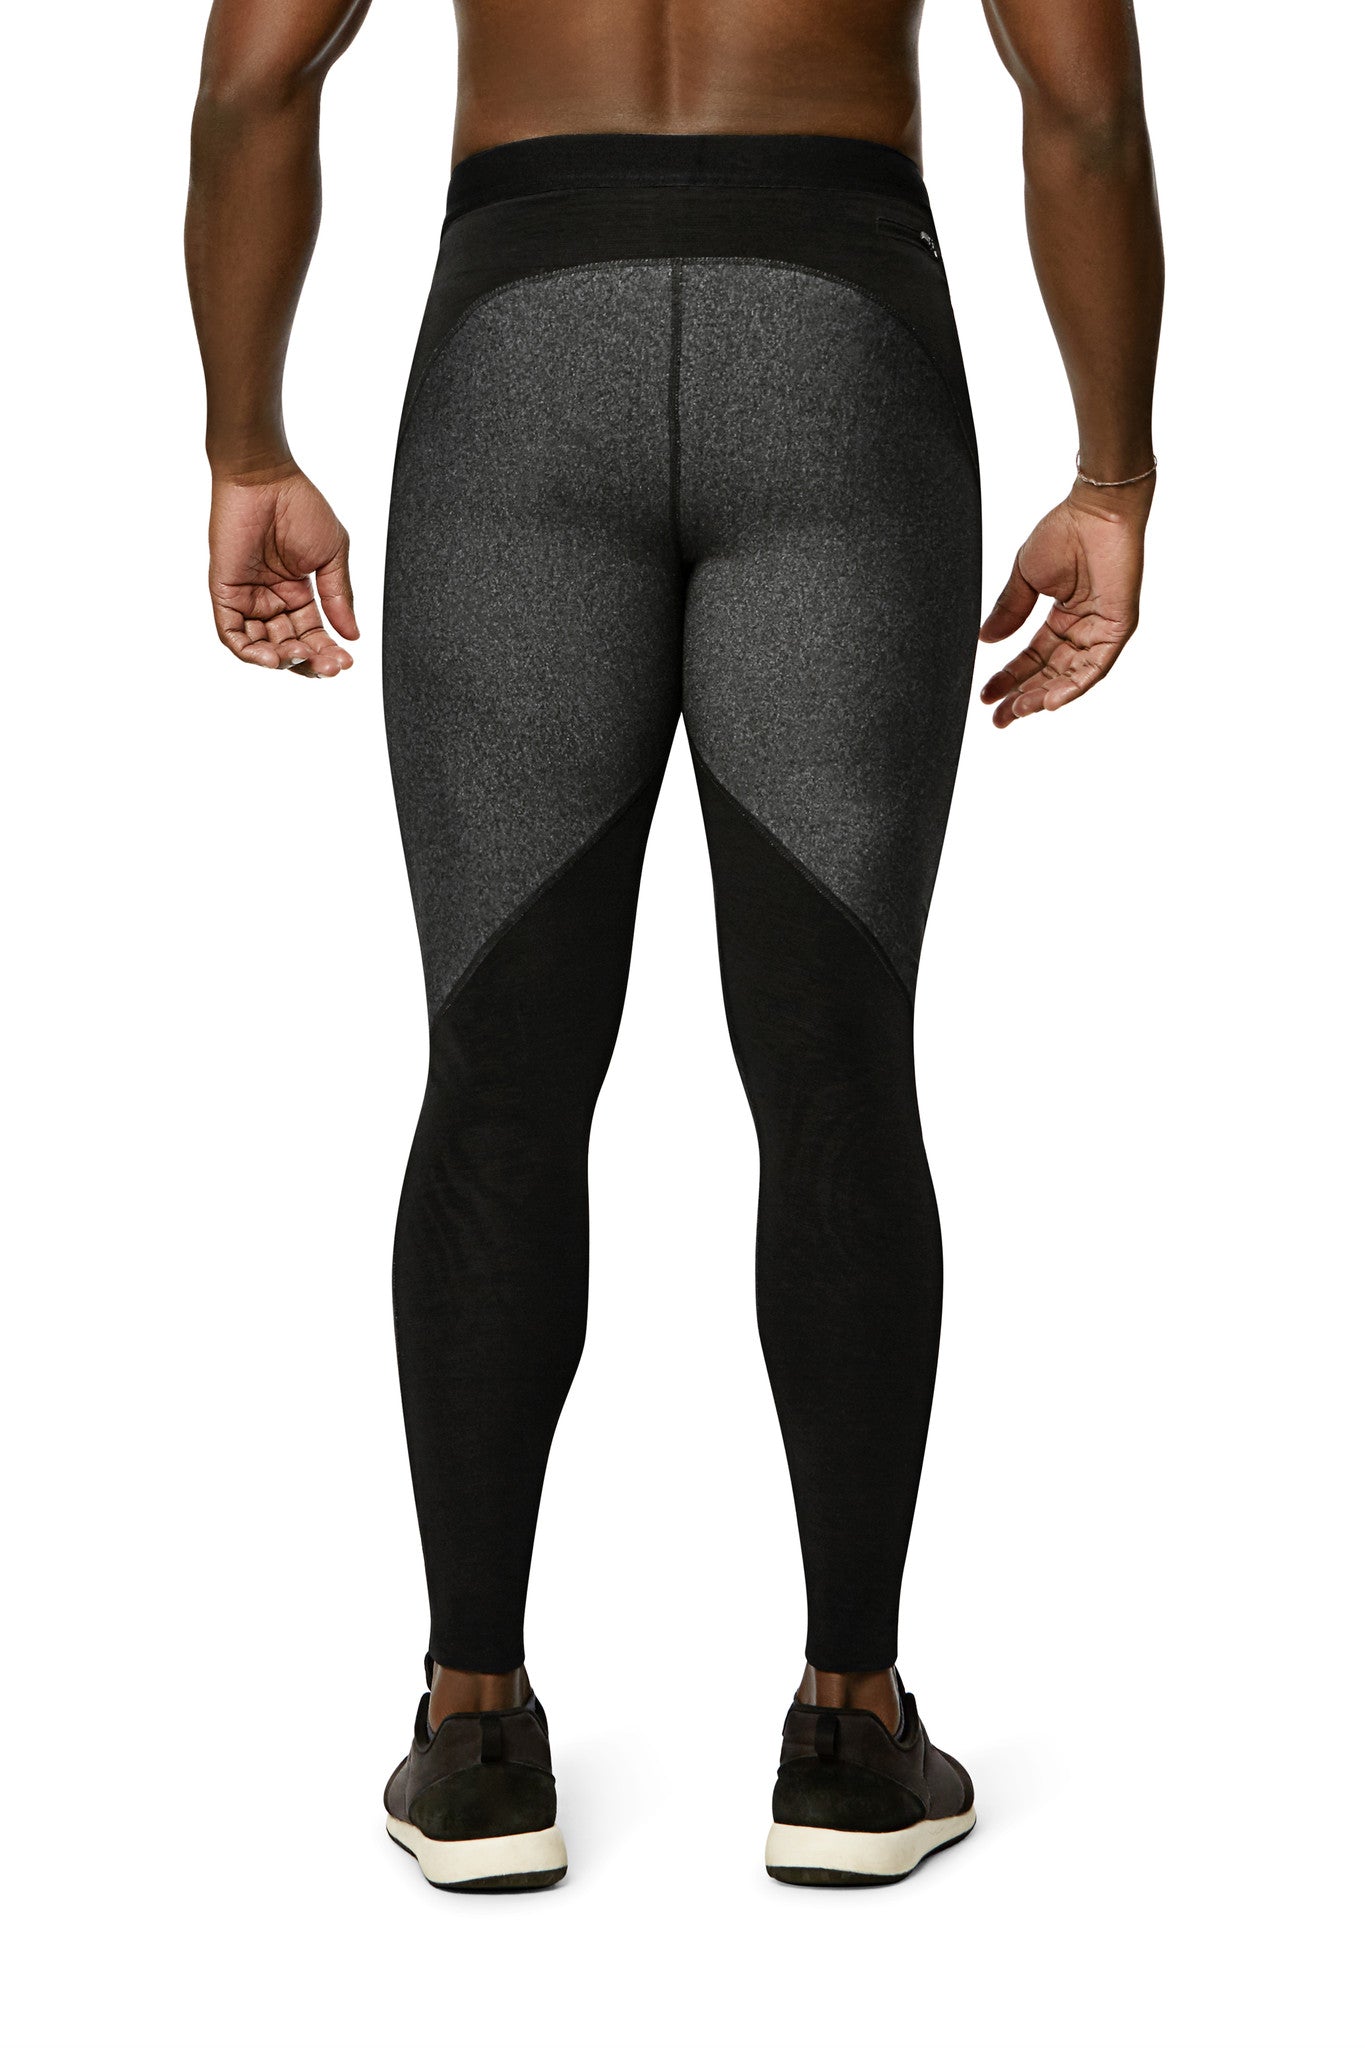 Pro Gym Men Nylon Reflective Sports Compression Lower/Pants/Tights/Leggings